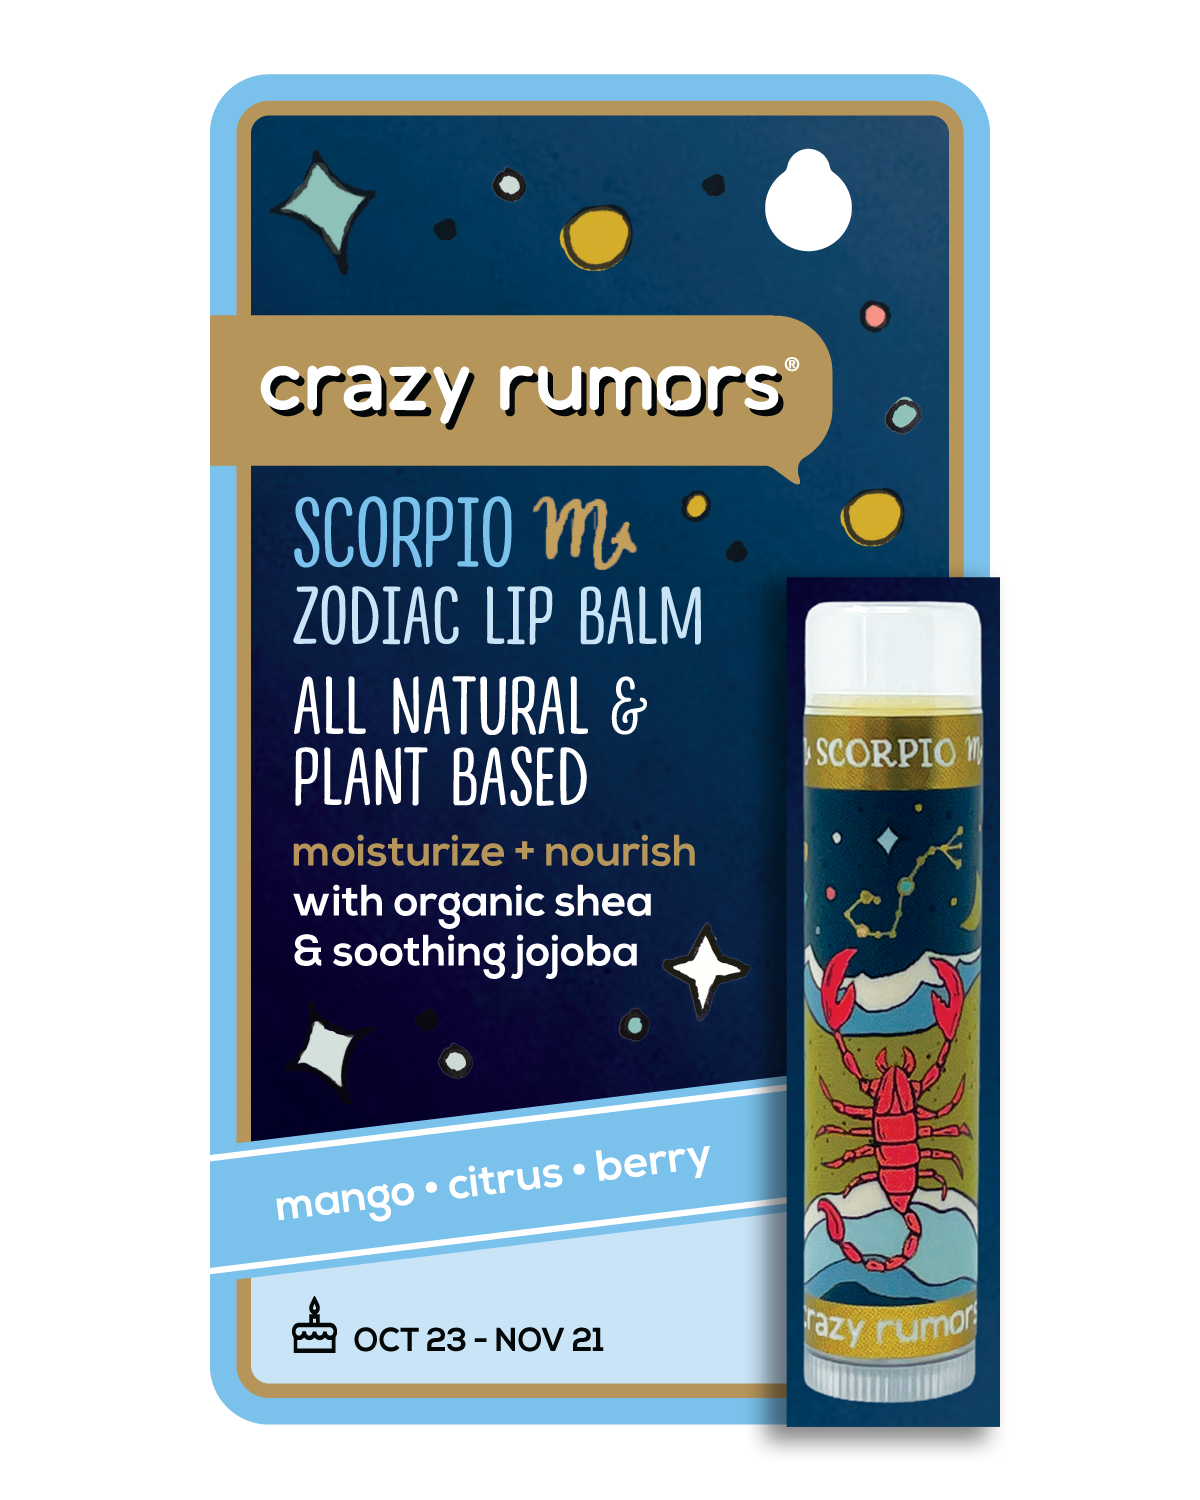 Scorpio - Zodiac Lip Balm Water Blend